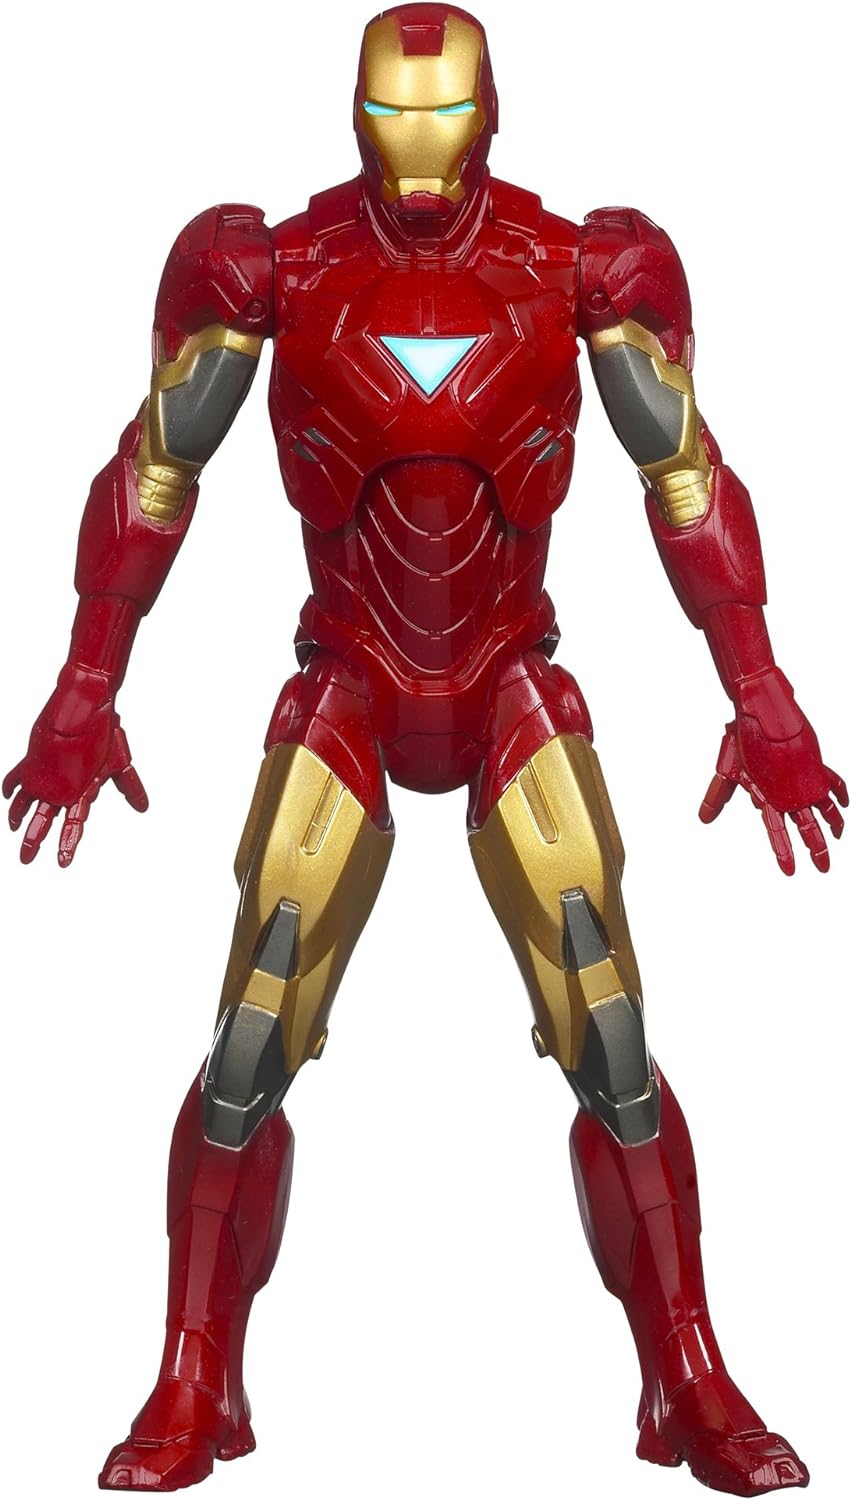 Marvel The Avengers Movie Series Iron Man Mark VI Figure